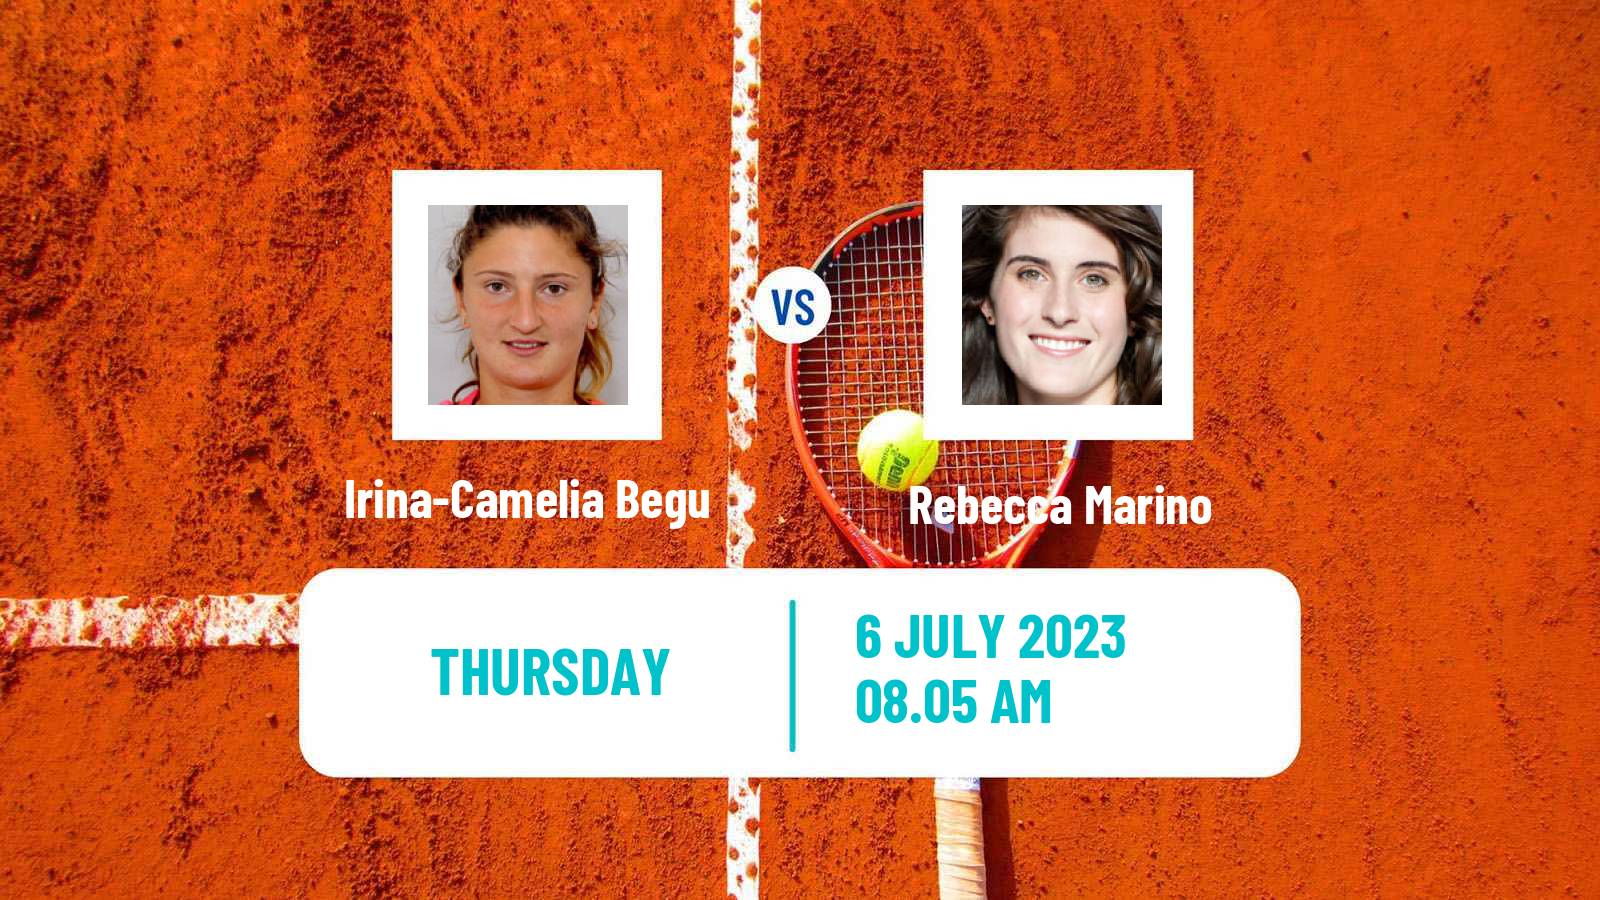 Tennis WTA Wimbledon Irina-Camelia Begu - Rebecca Marino